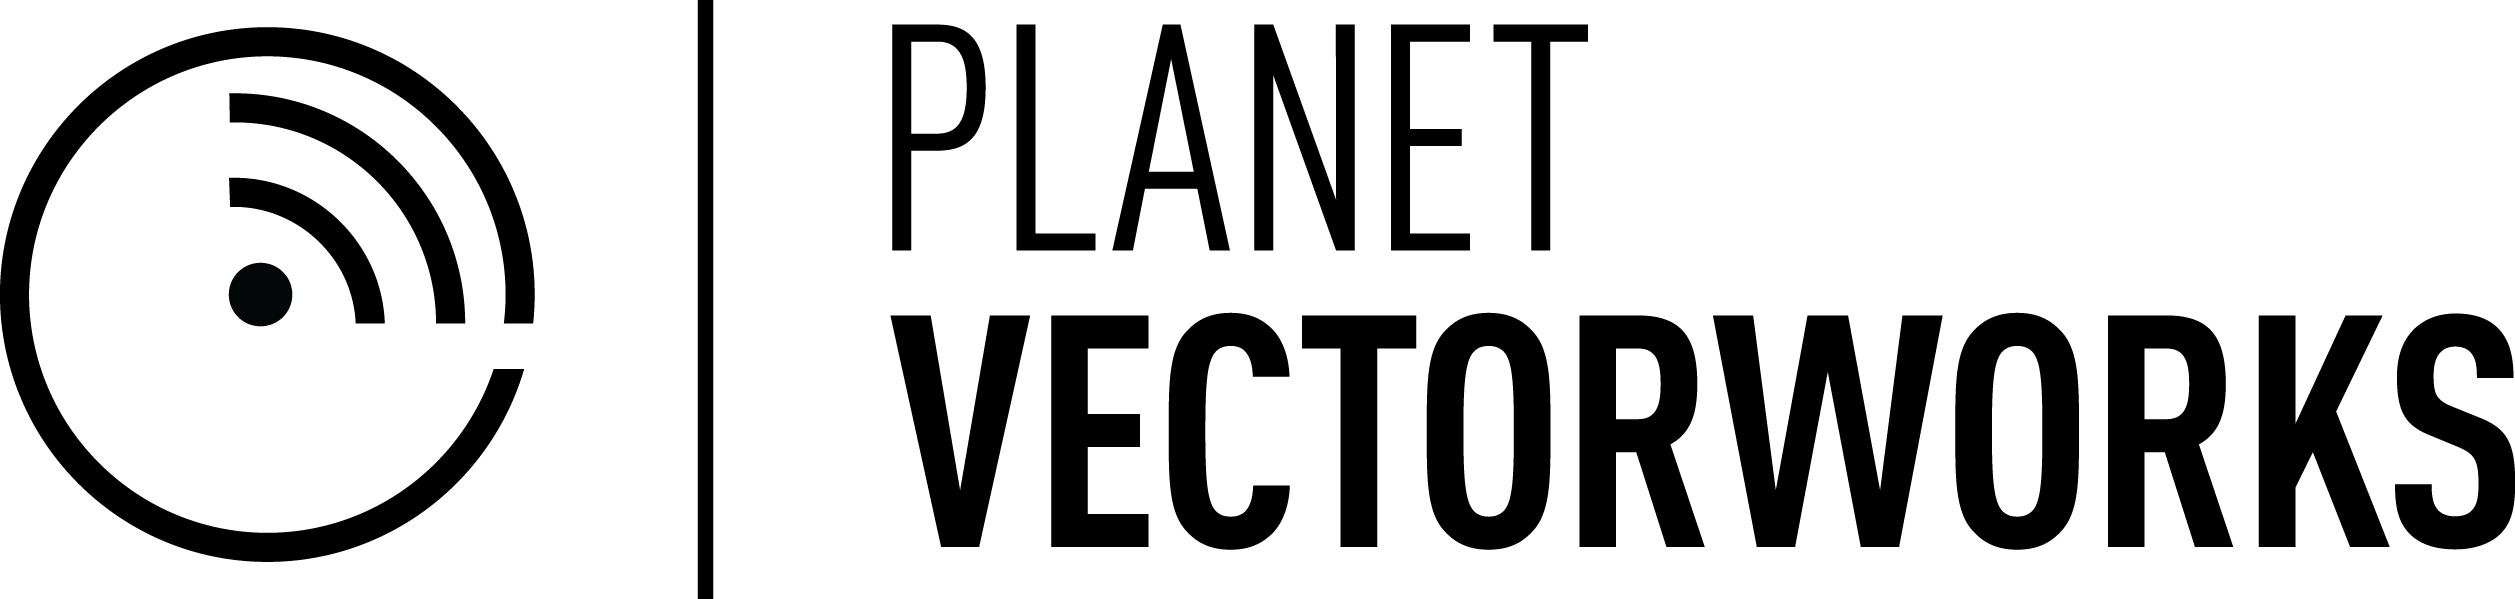 Vectorworks Logo - Vectorworks 2018 Press Kit